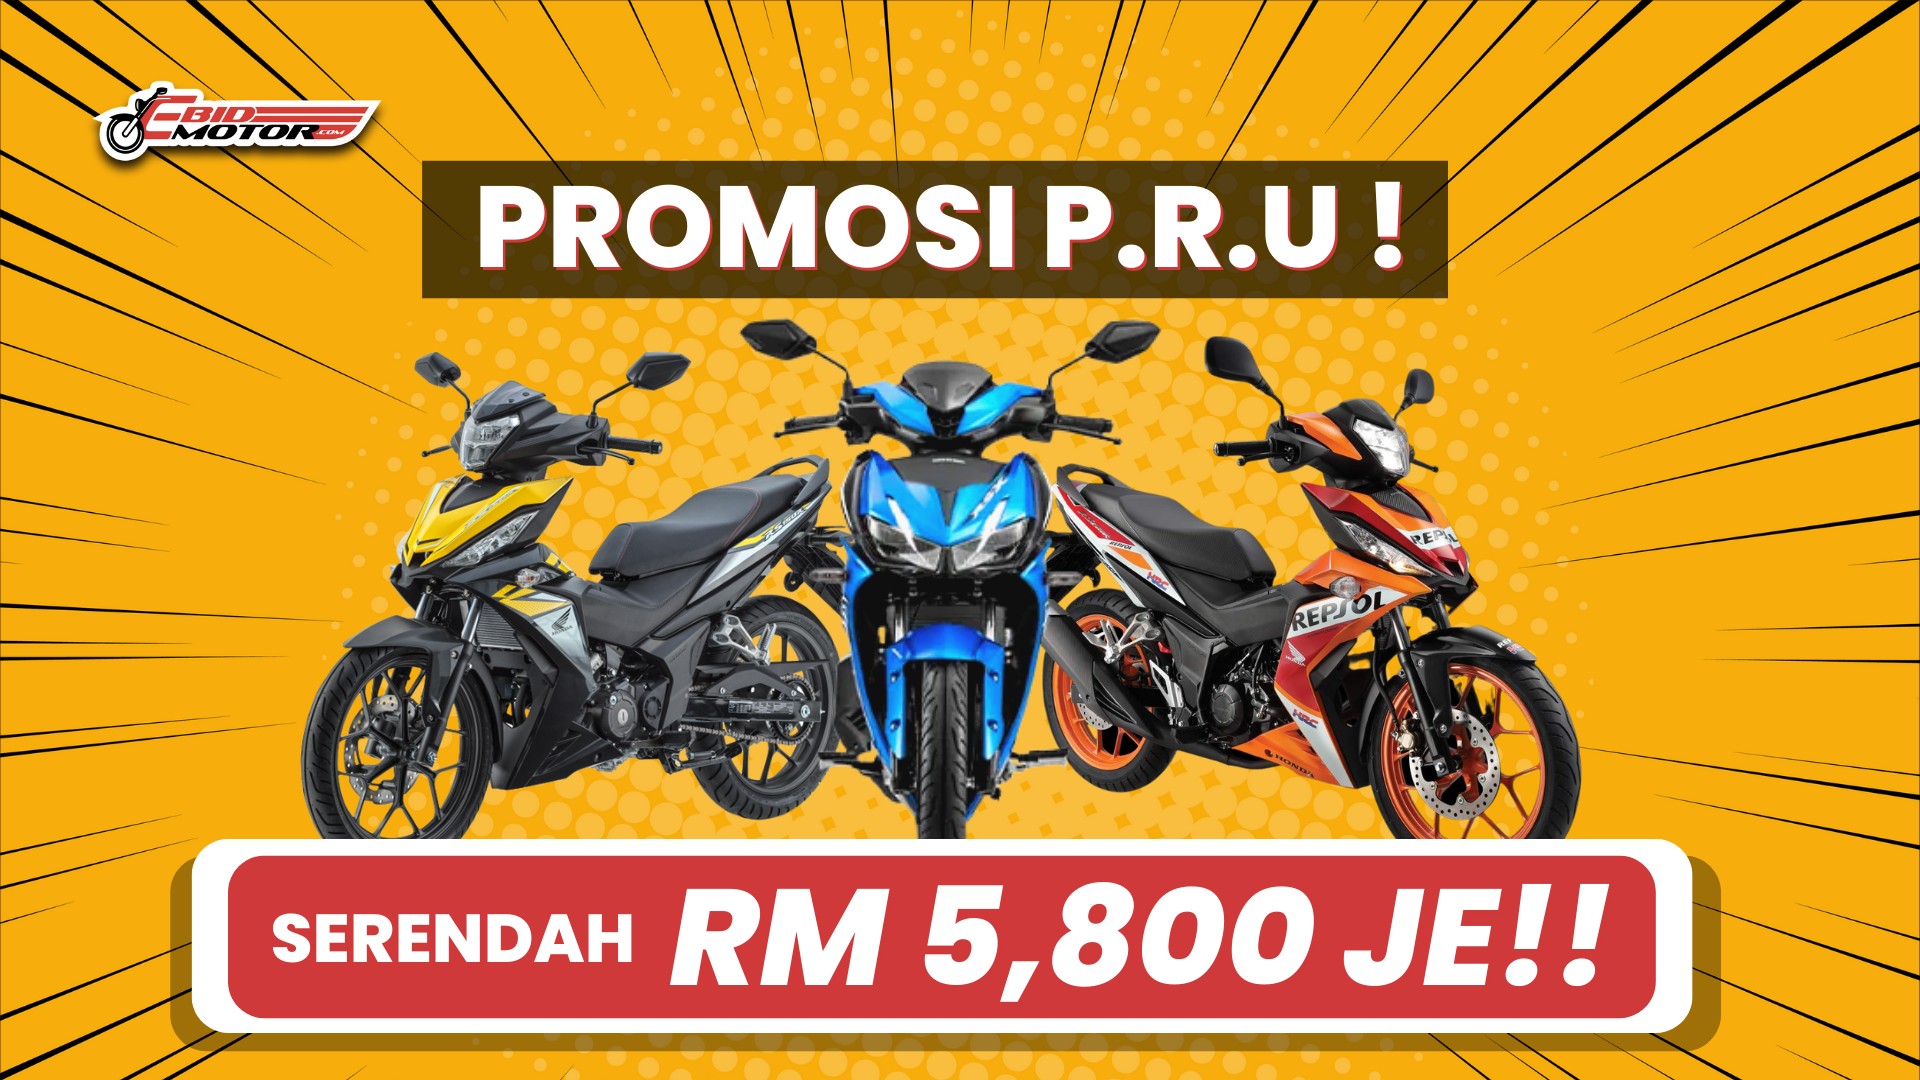 Katalog: Promosi P.R.U Honda RS150 V1,V2 & RSX SERENDAH RM5,800 JE!